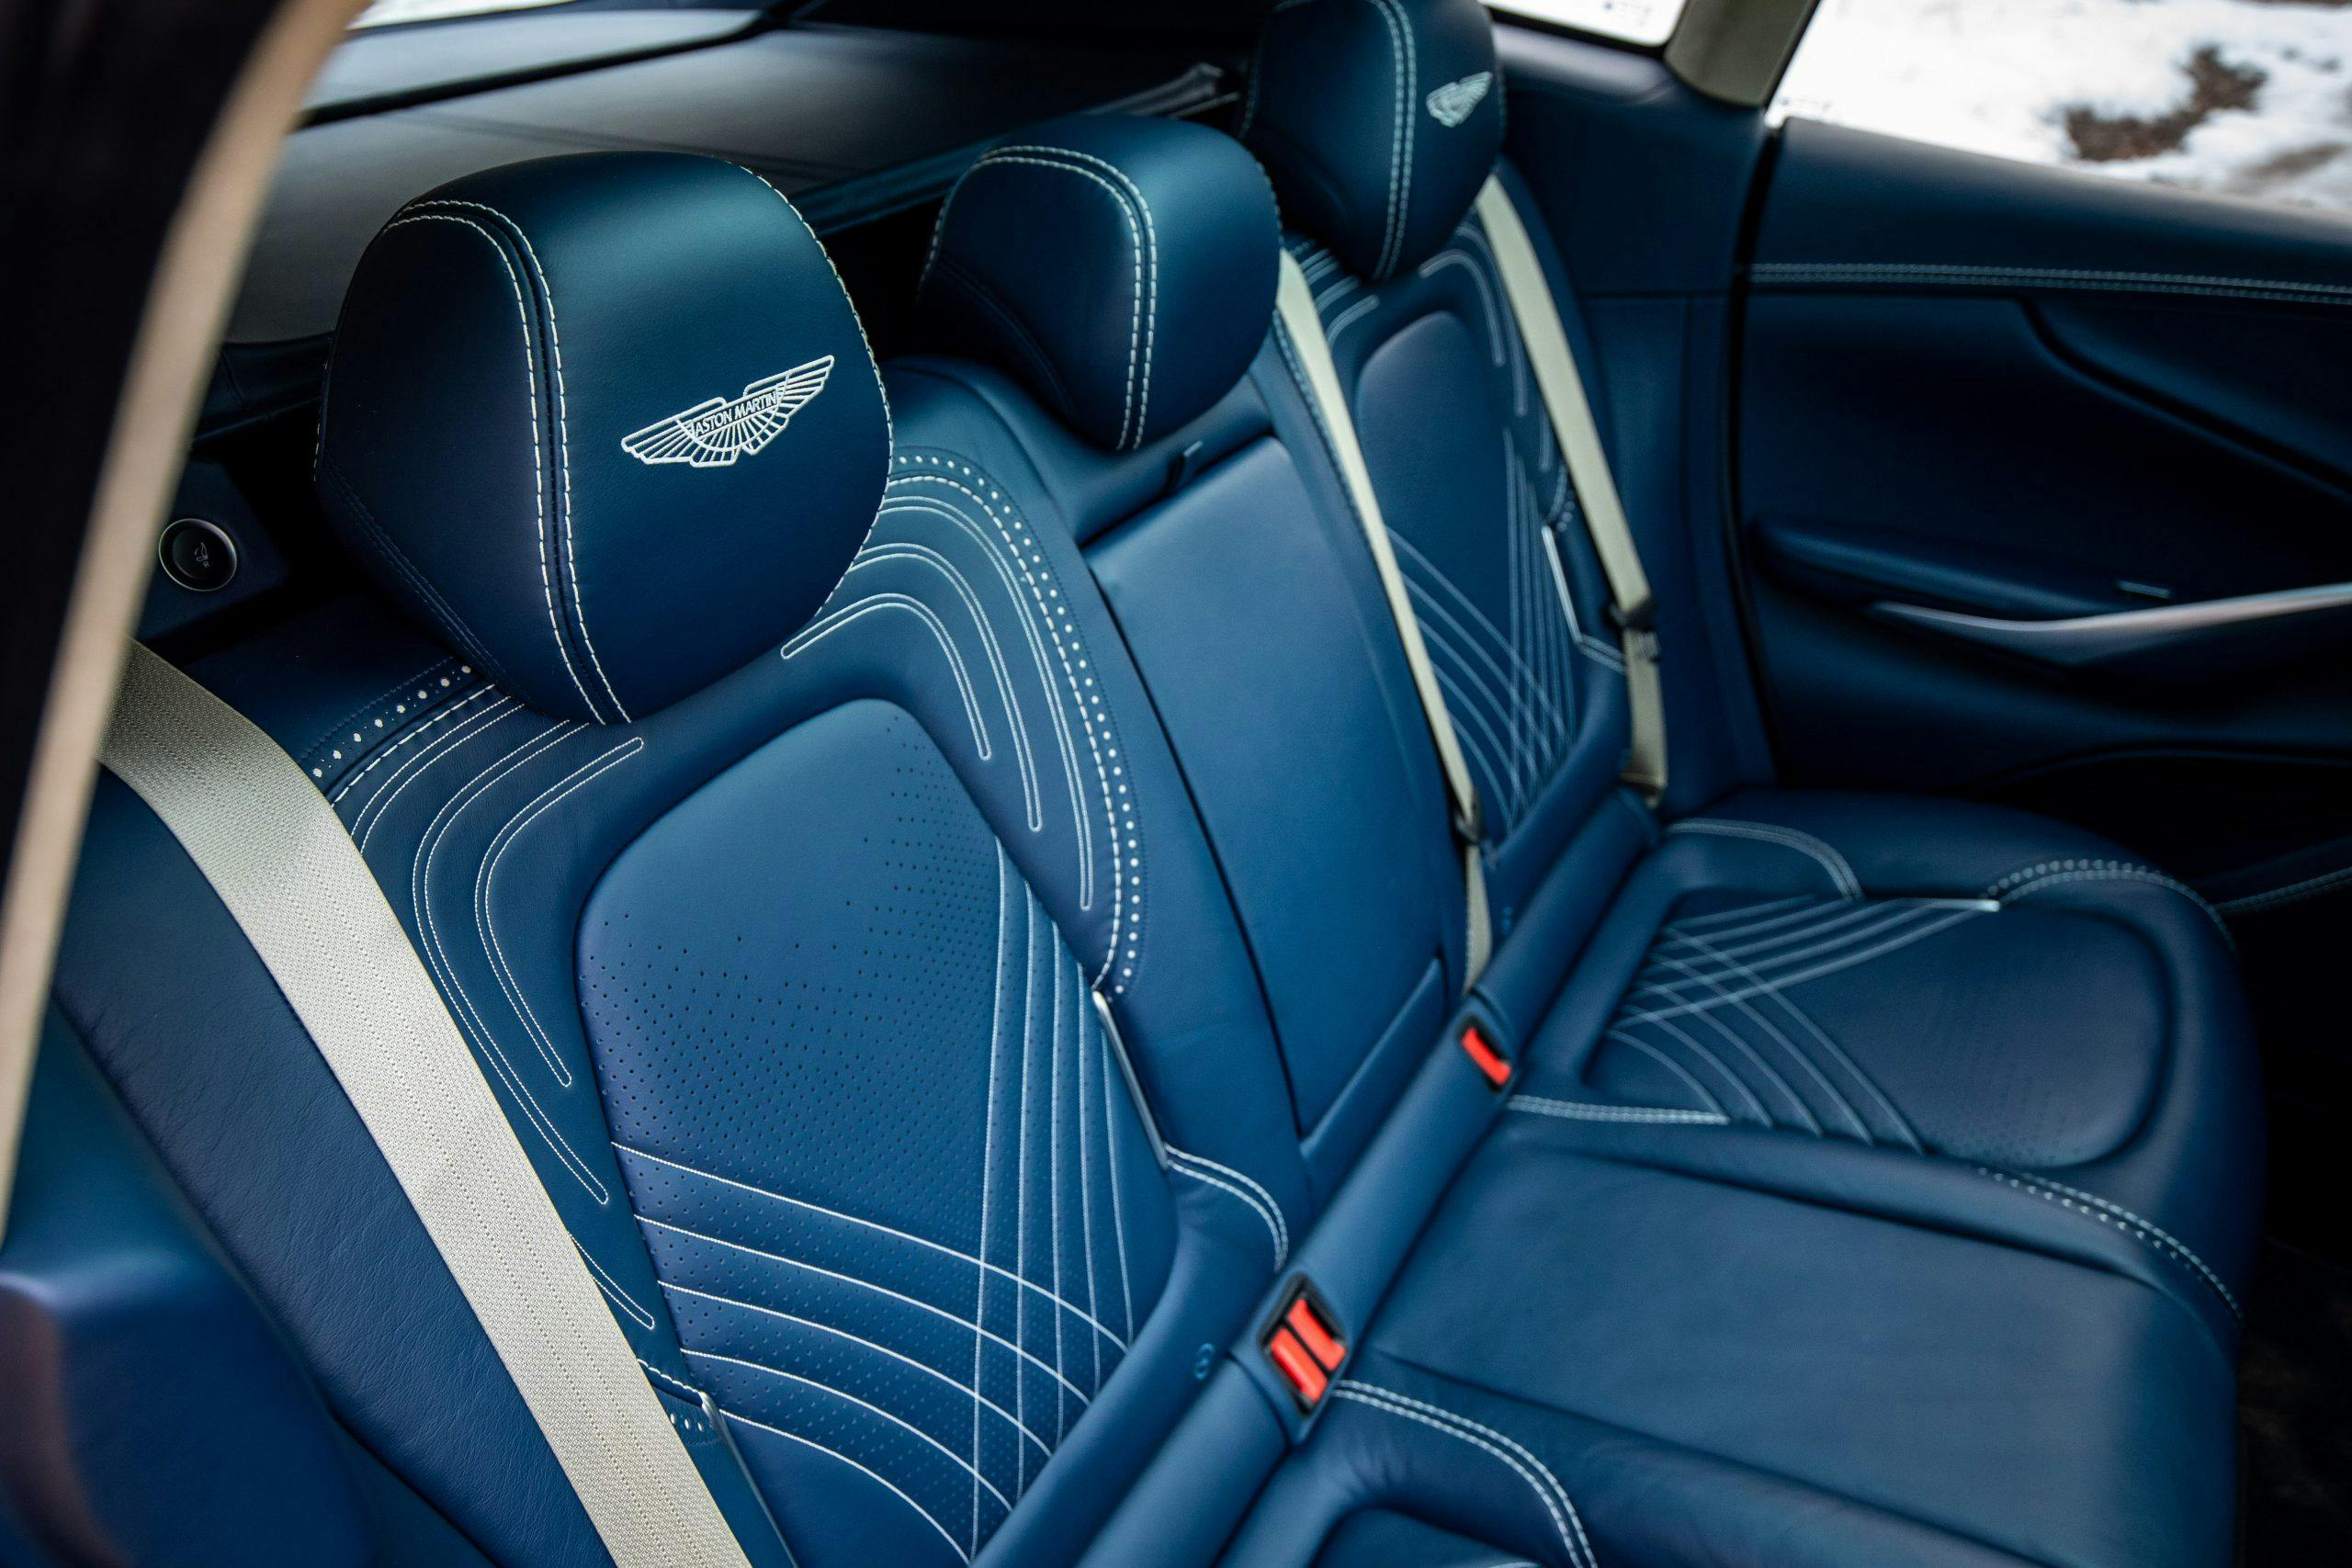 2021 Aston Martin DBX interior rear seat